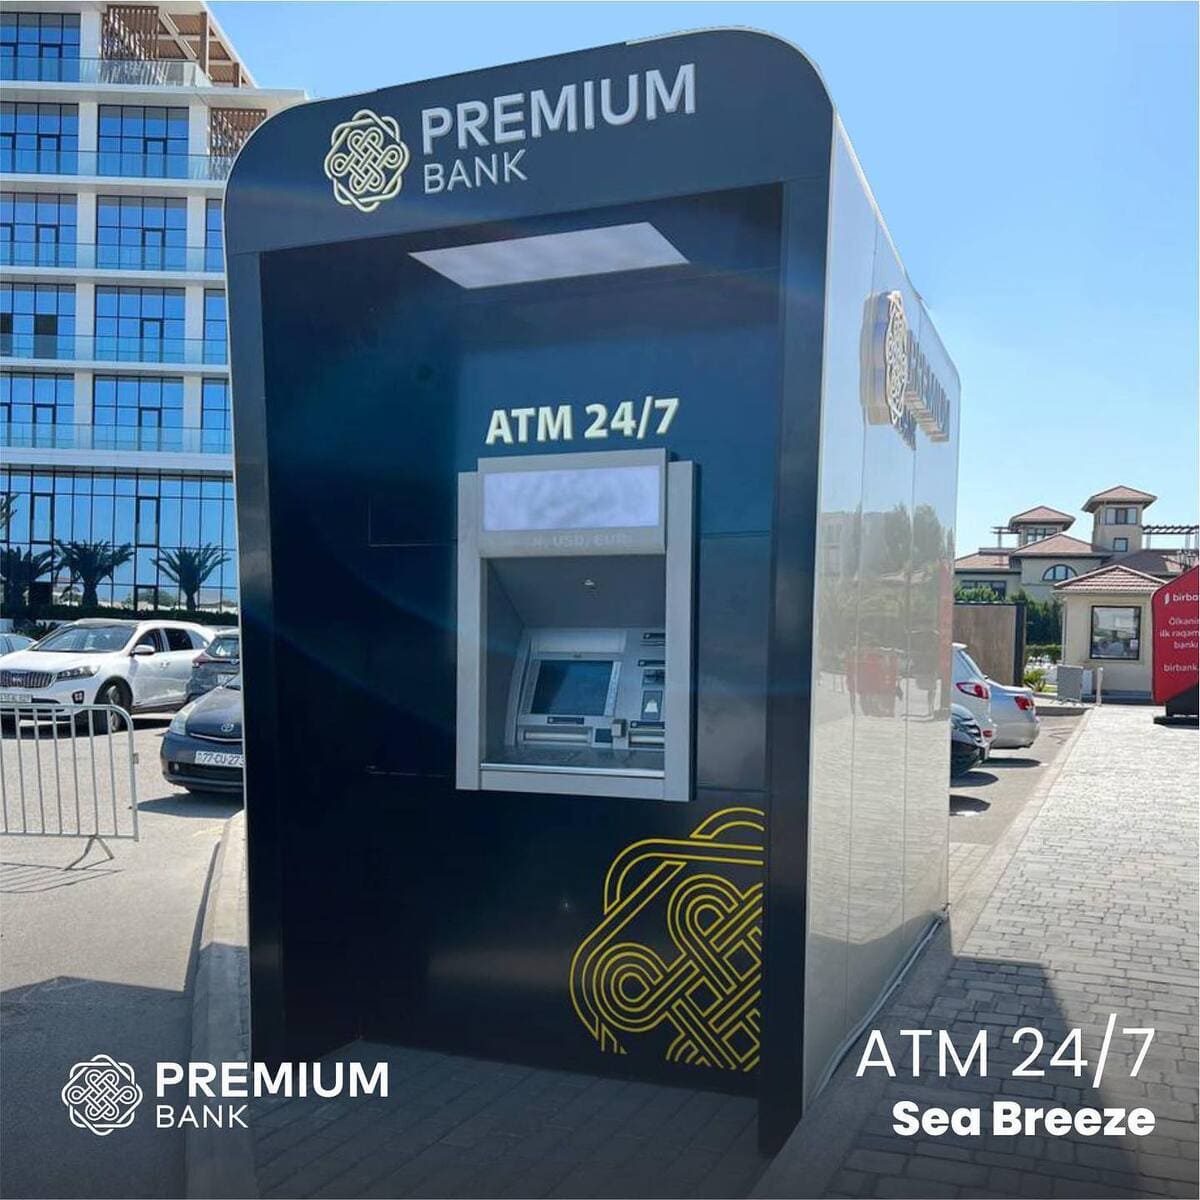 An ATM of Premium Bank in Azerbaijan